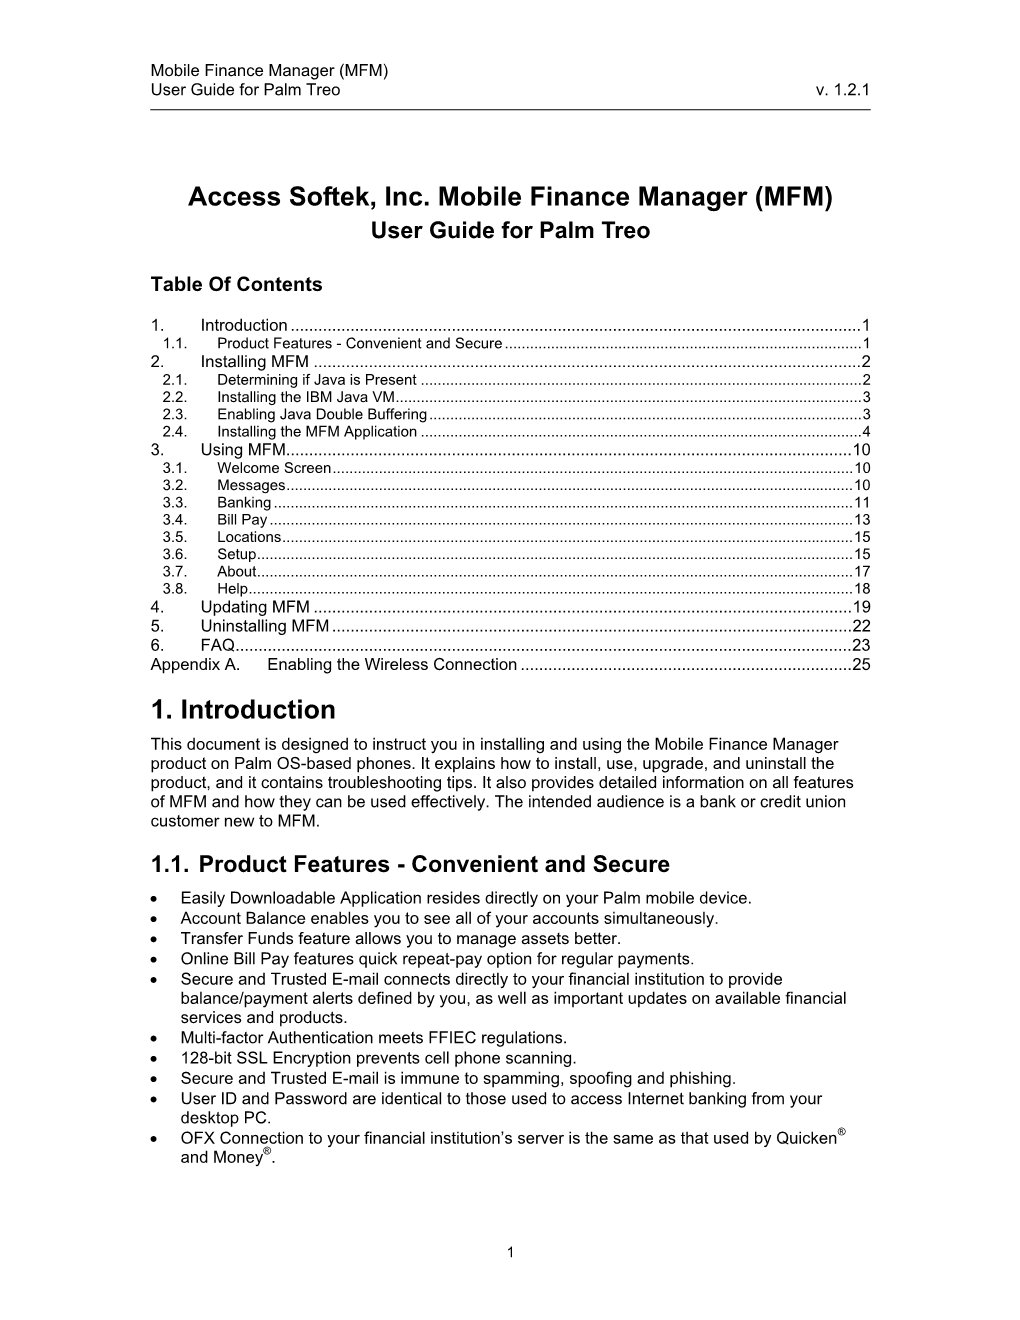 Access Softek, Inc. Mobile Finance Manager (MFM) User Guide for Palm Treo